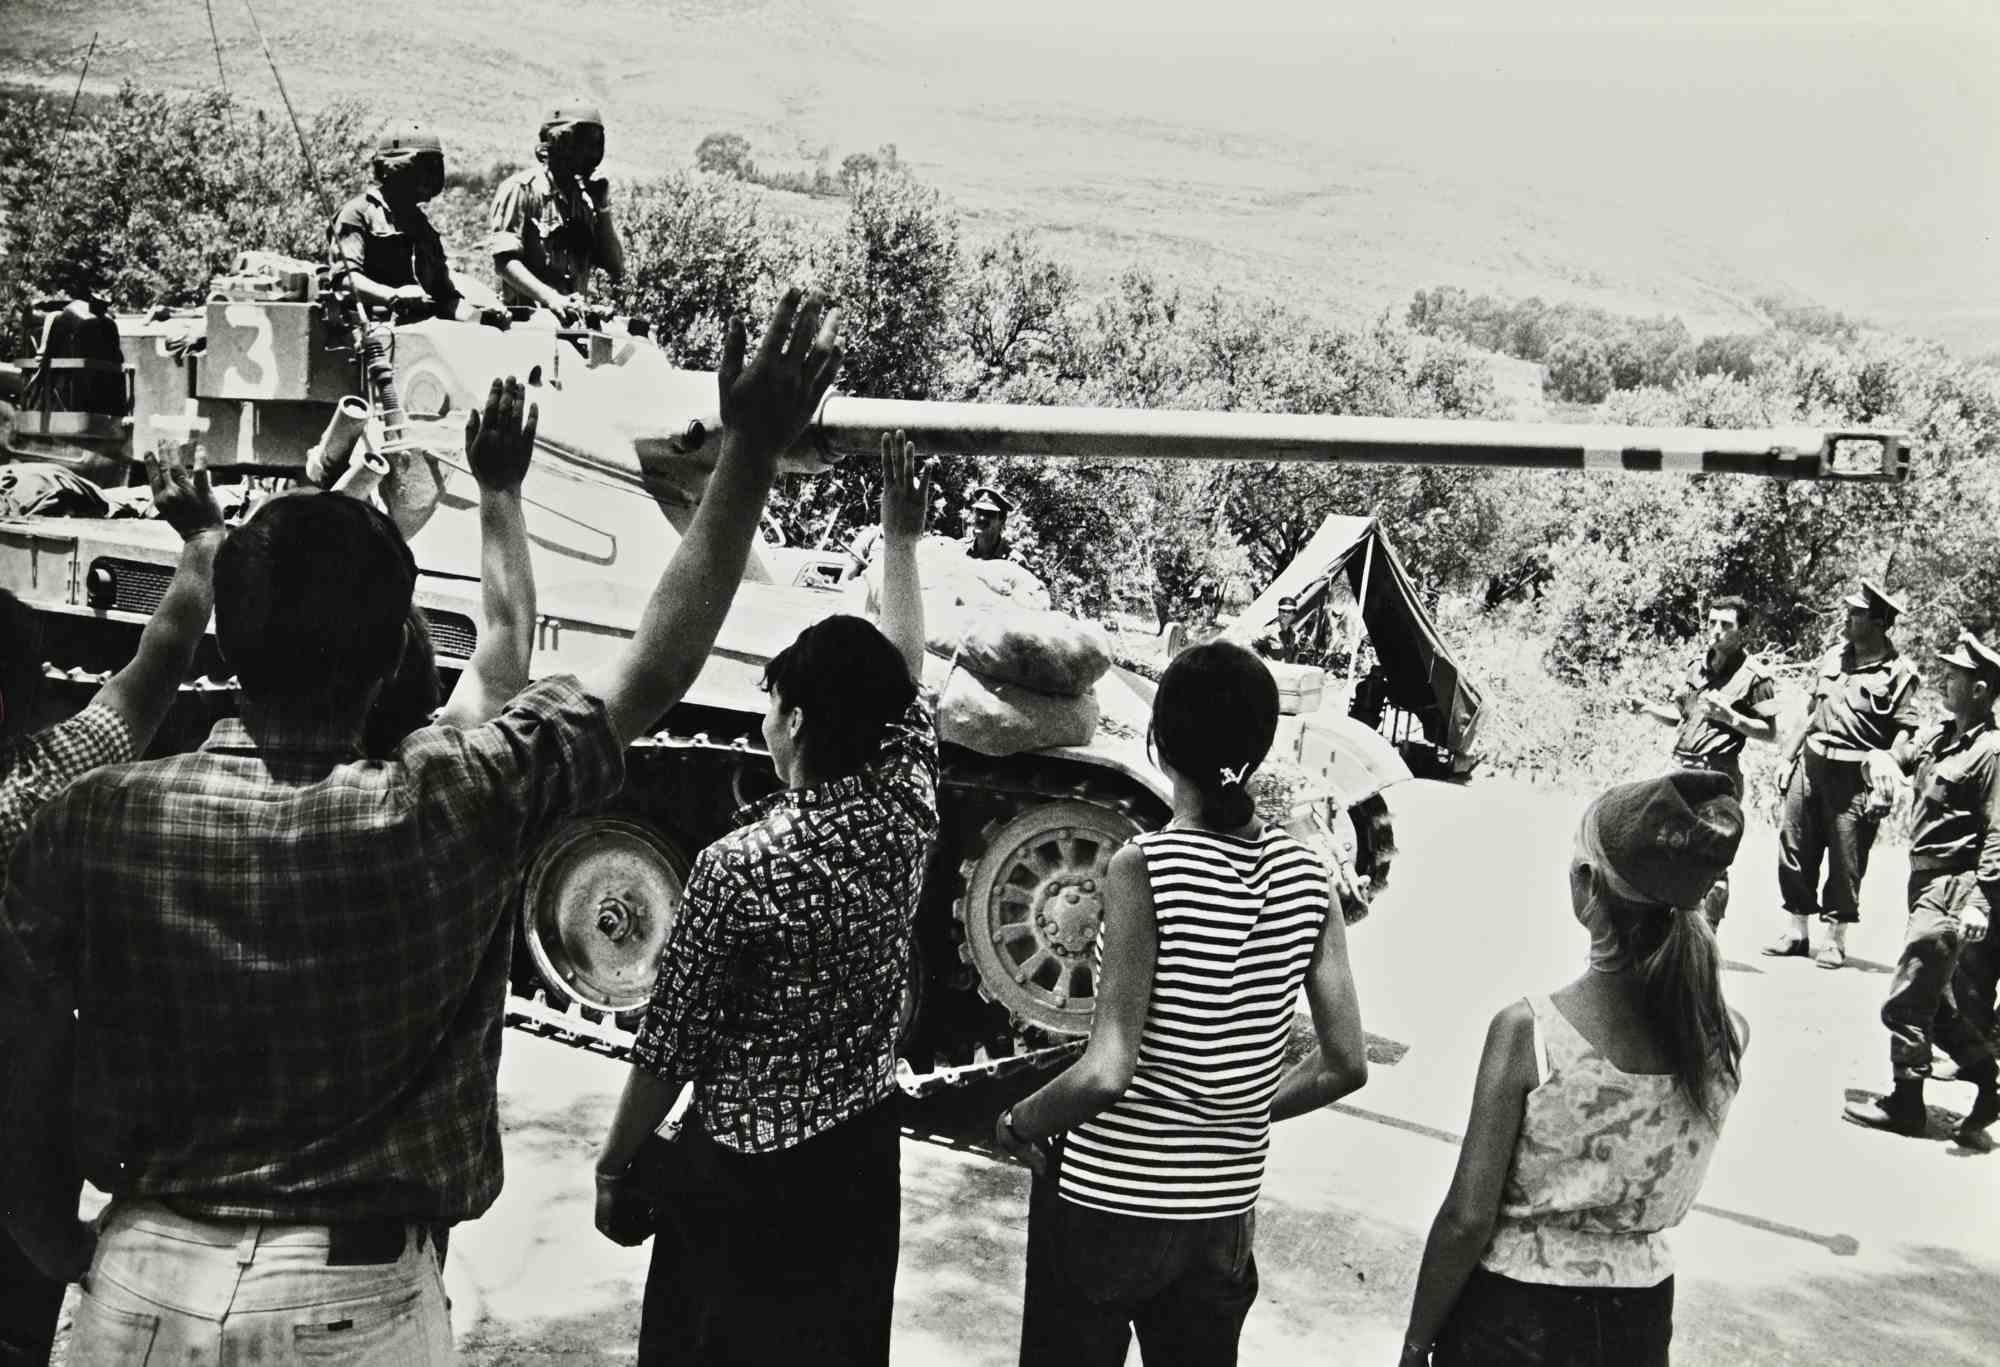 Unknown Black and White Photograph – Viet Cong Tank – Vintage b/w-Foto – 1970er Jahre